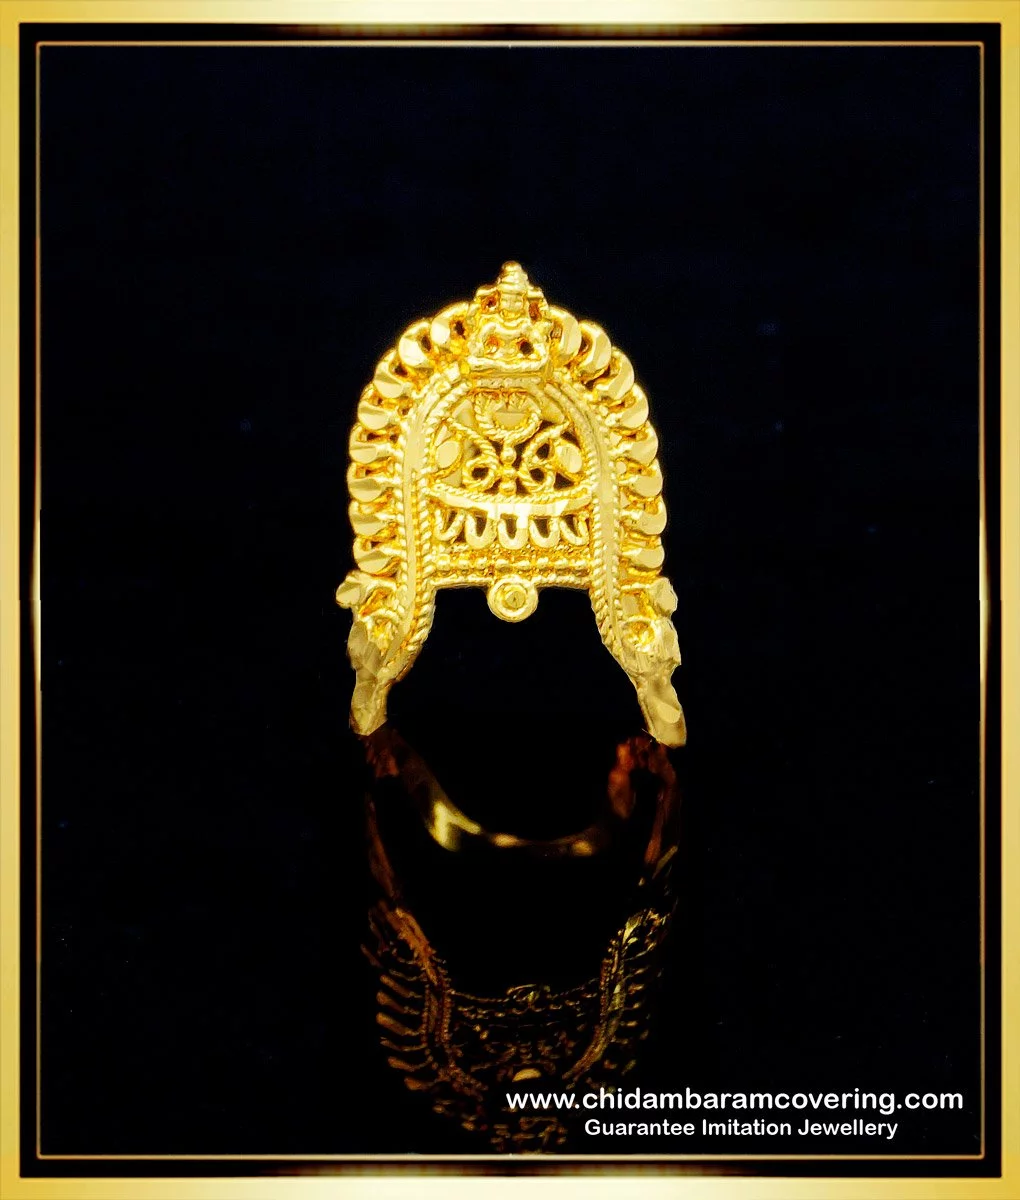 Shop Latest Gold Rings Online in India - Joyalukkas